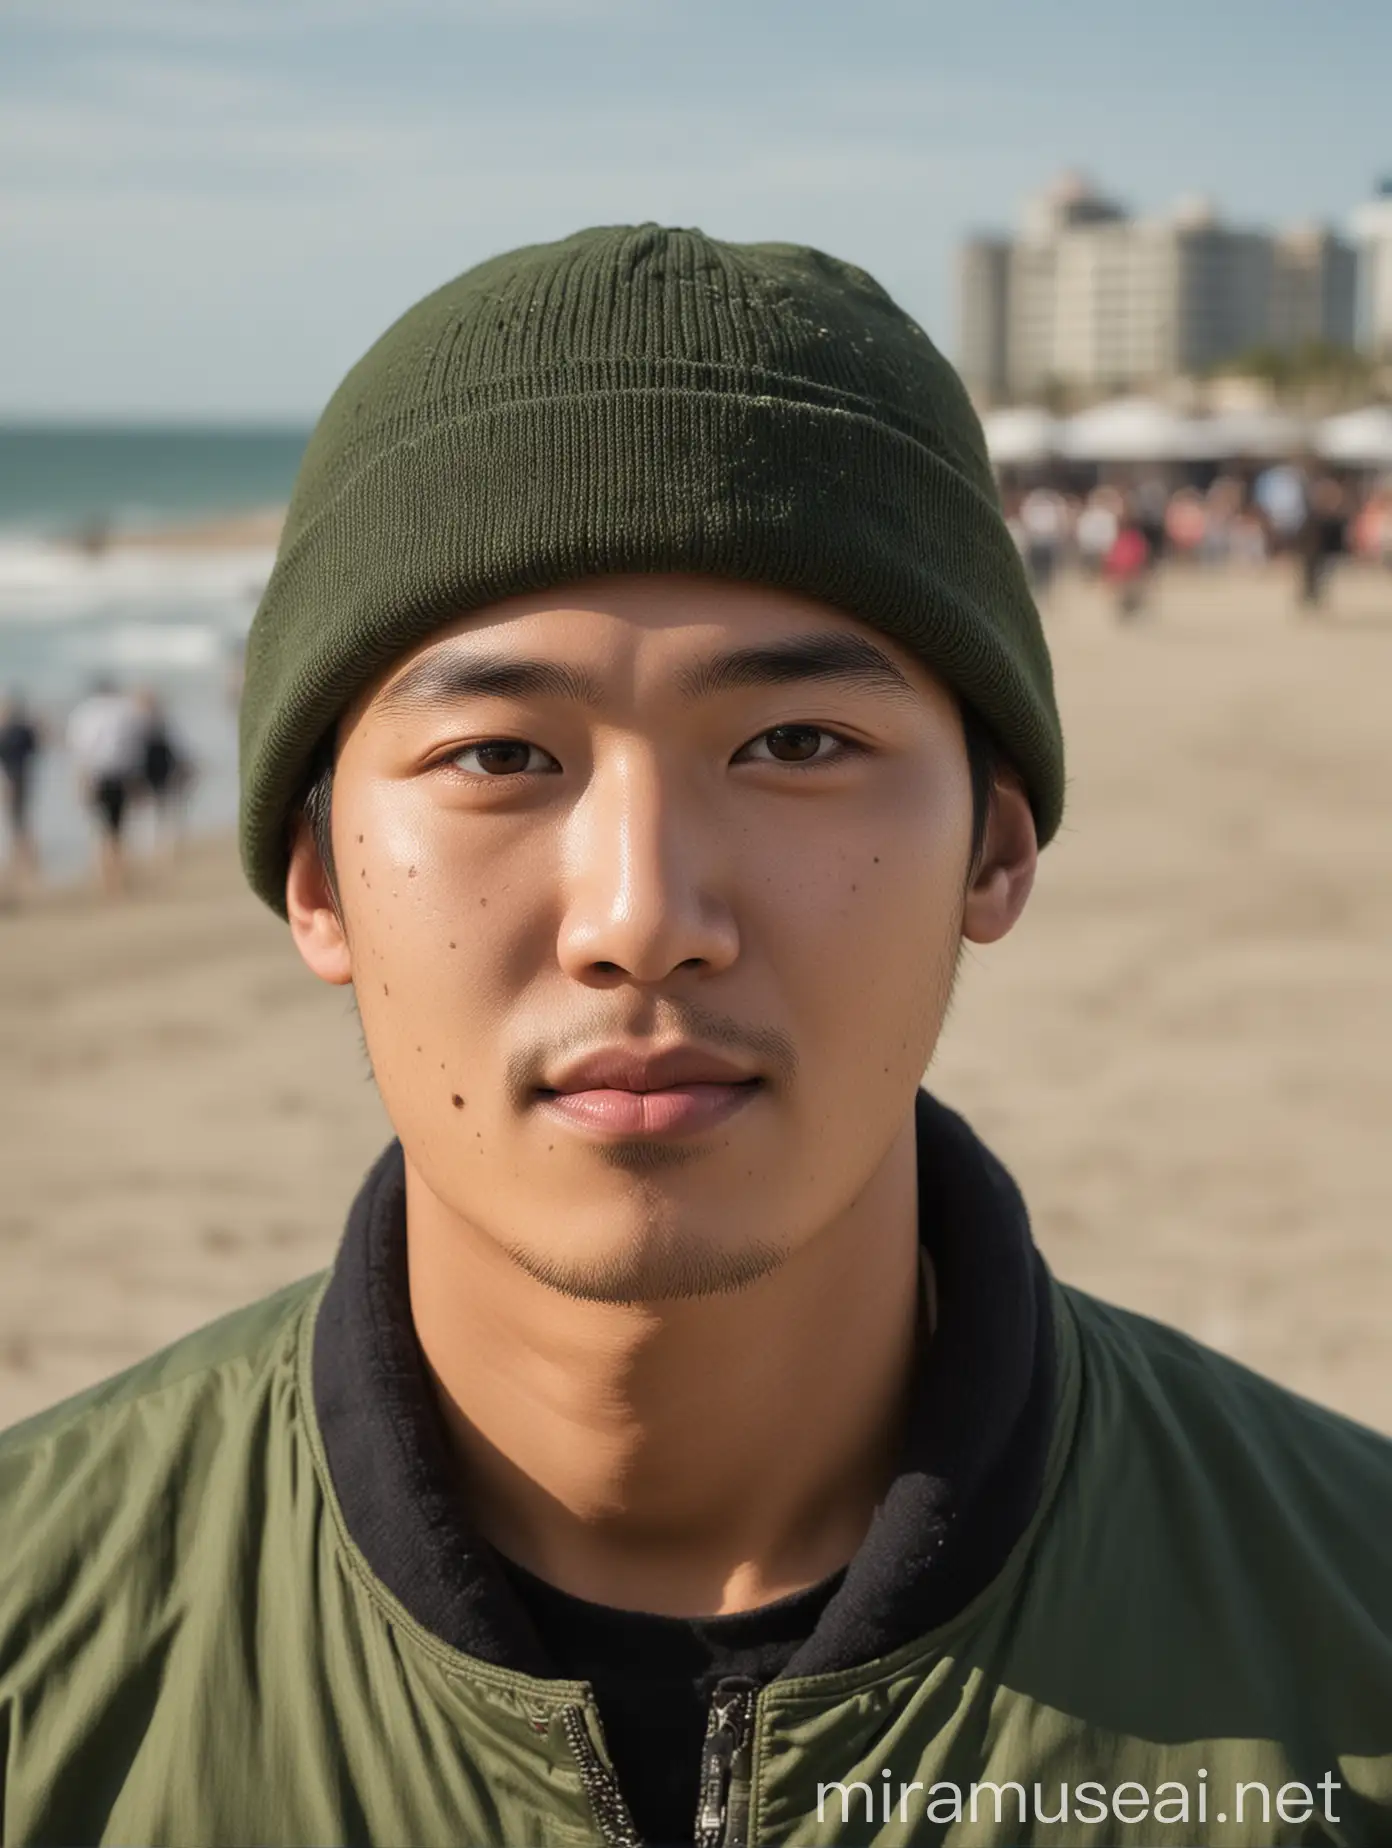 Camera nikon: Pria Asia berusia 30 tahun wajah tampan dan bersih, mengenakan beanie berwarna hitam mengenakan jaket bomber berwarna hijau army dengan beberapa tulisan di jaketnya,latar belakang atas panggung tepi pantai siang hari.